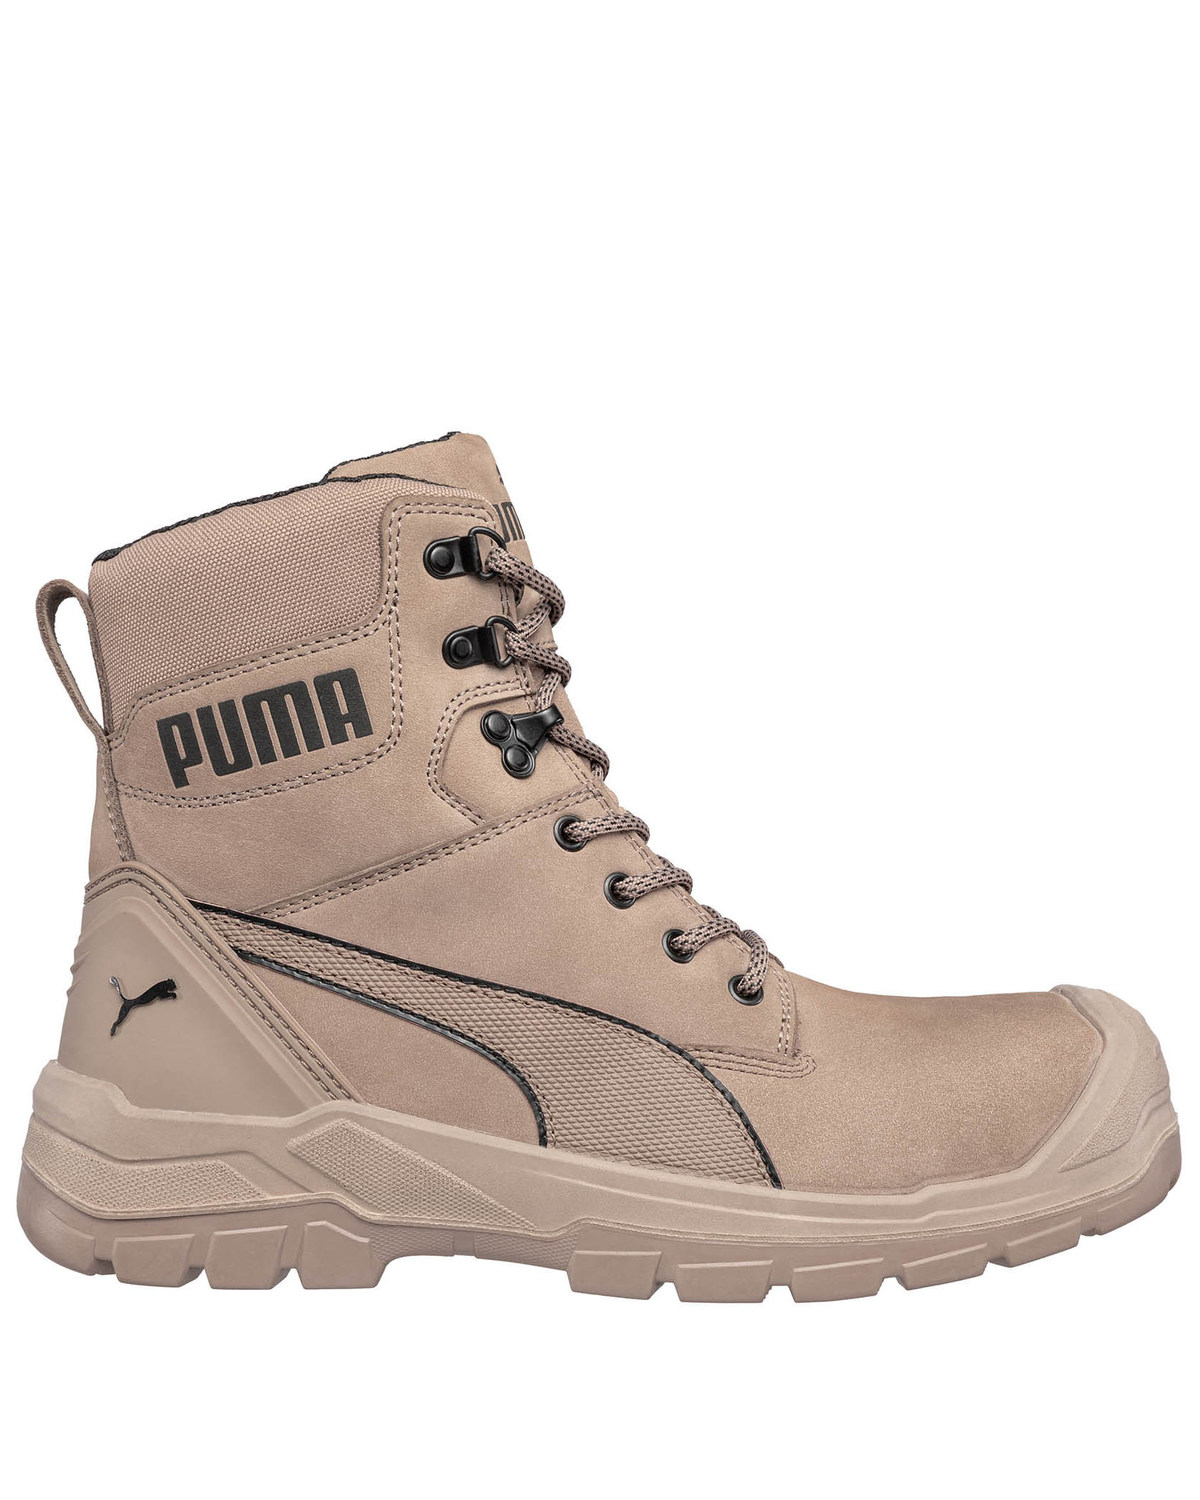 puma hiking boots